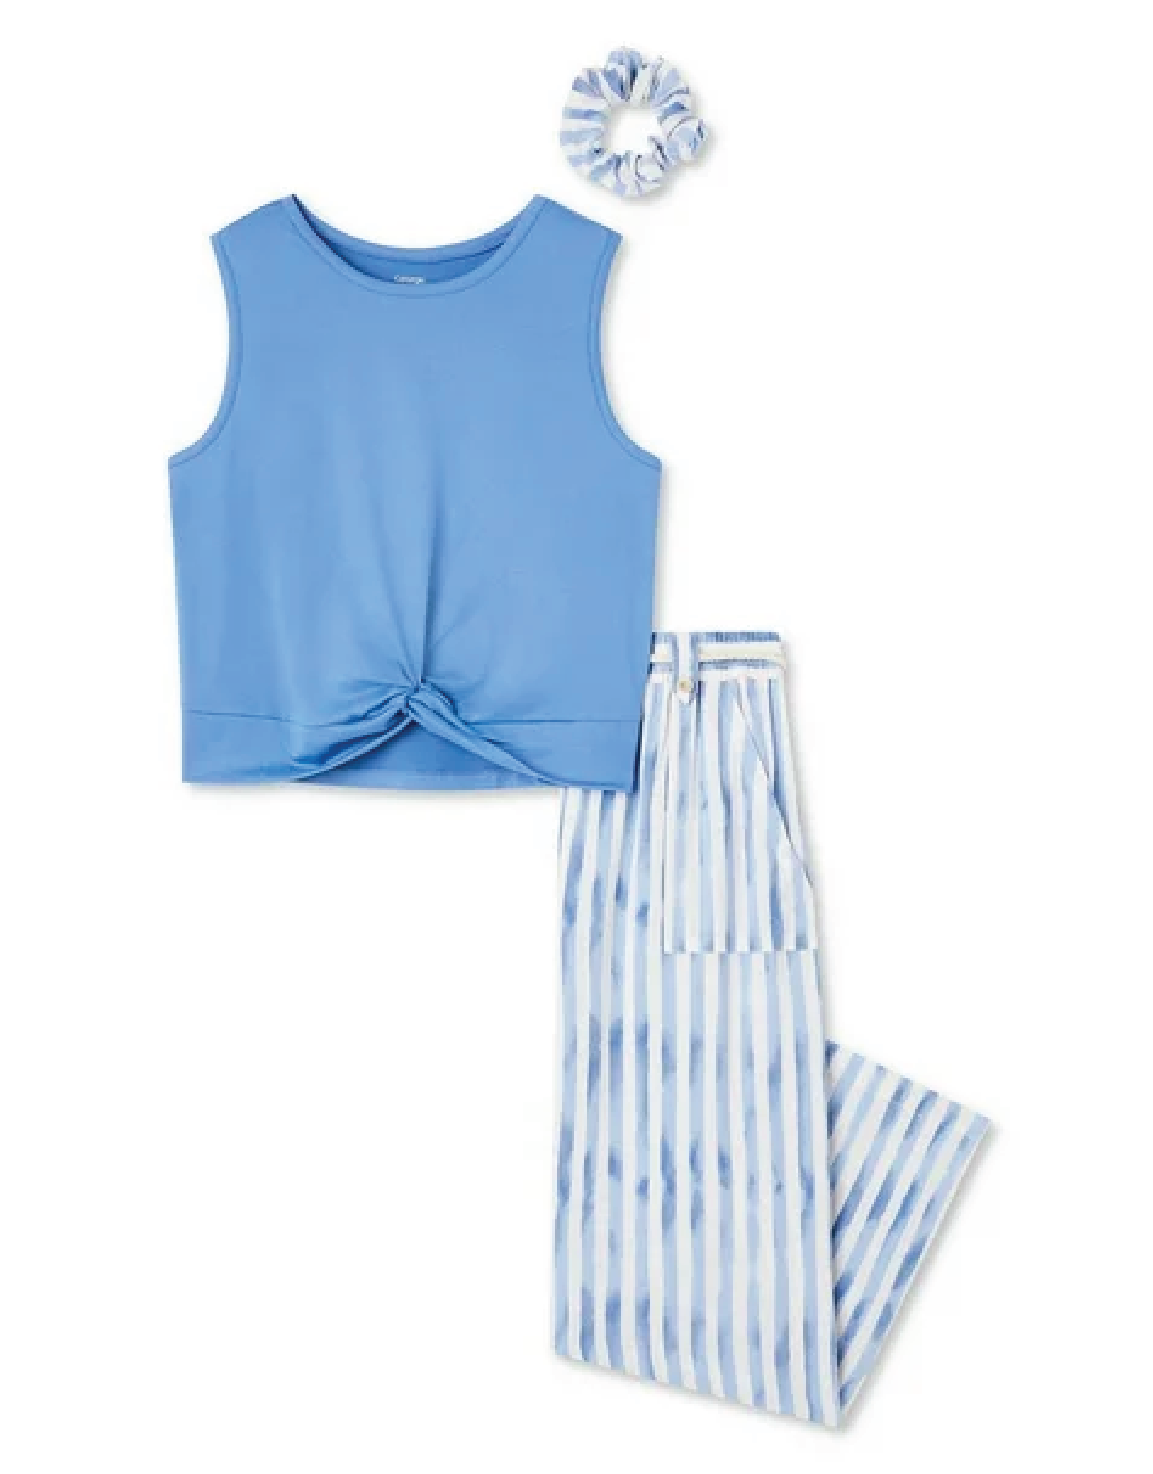 a scrunchie, tank top, and striped capri pants